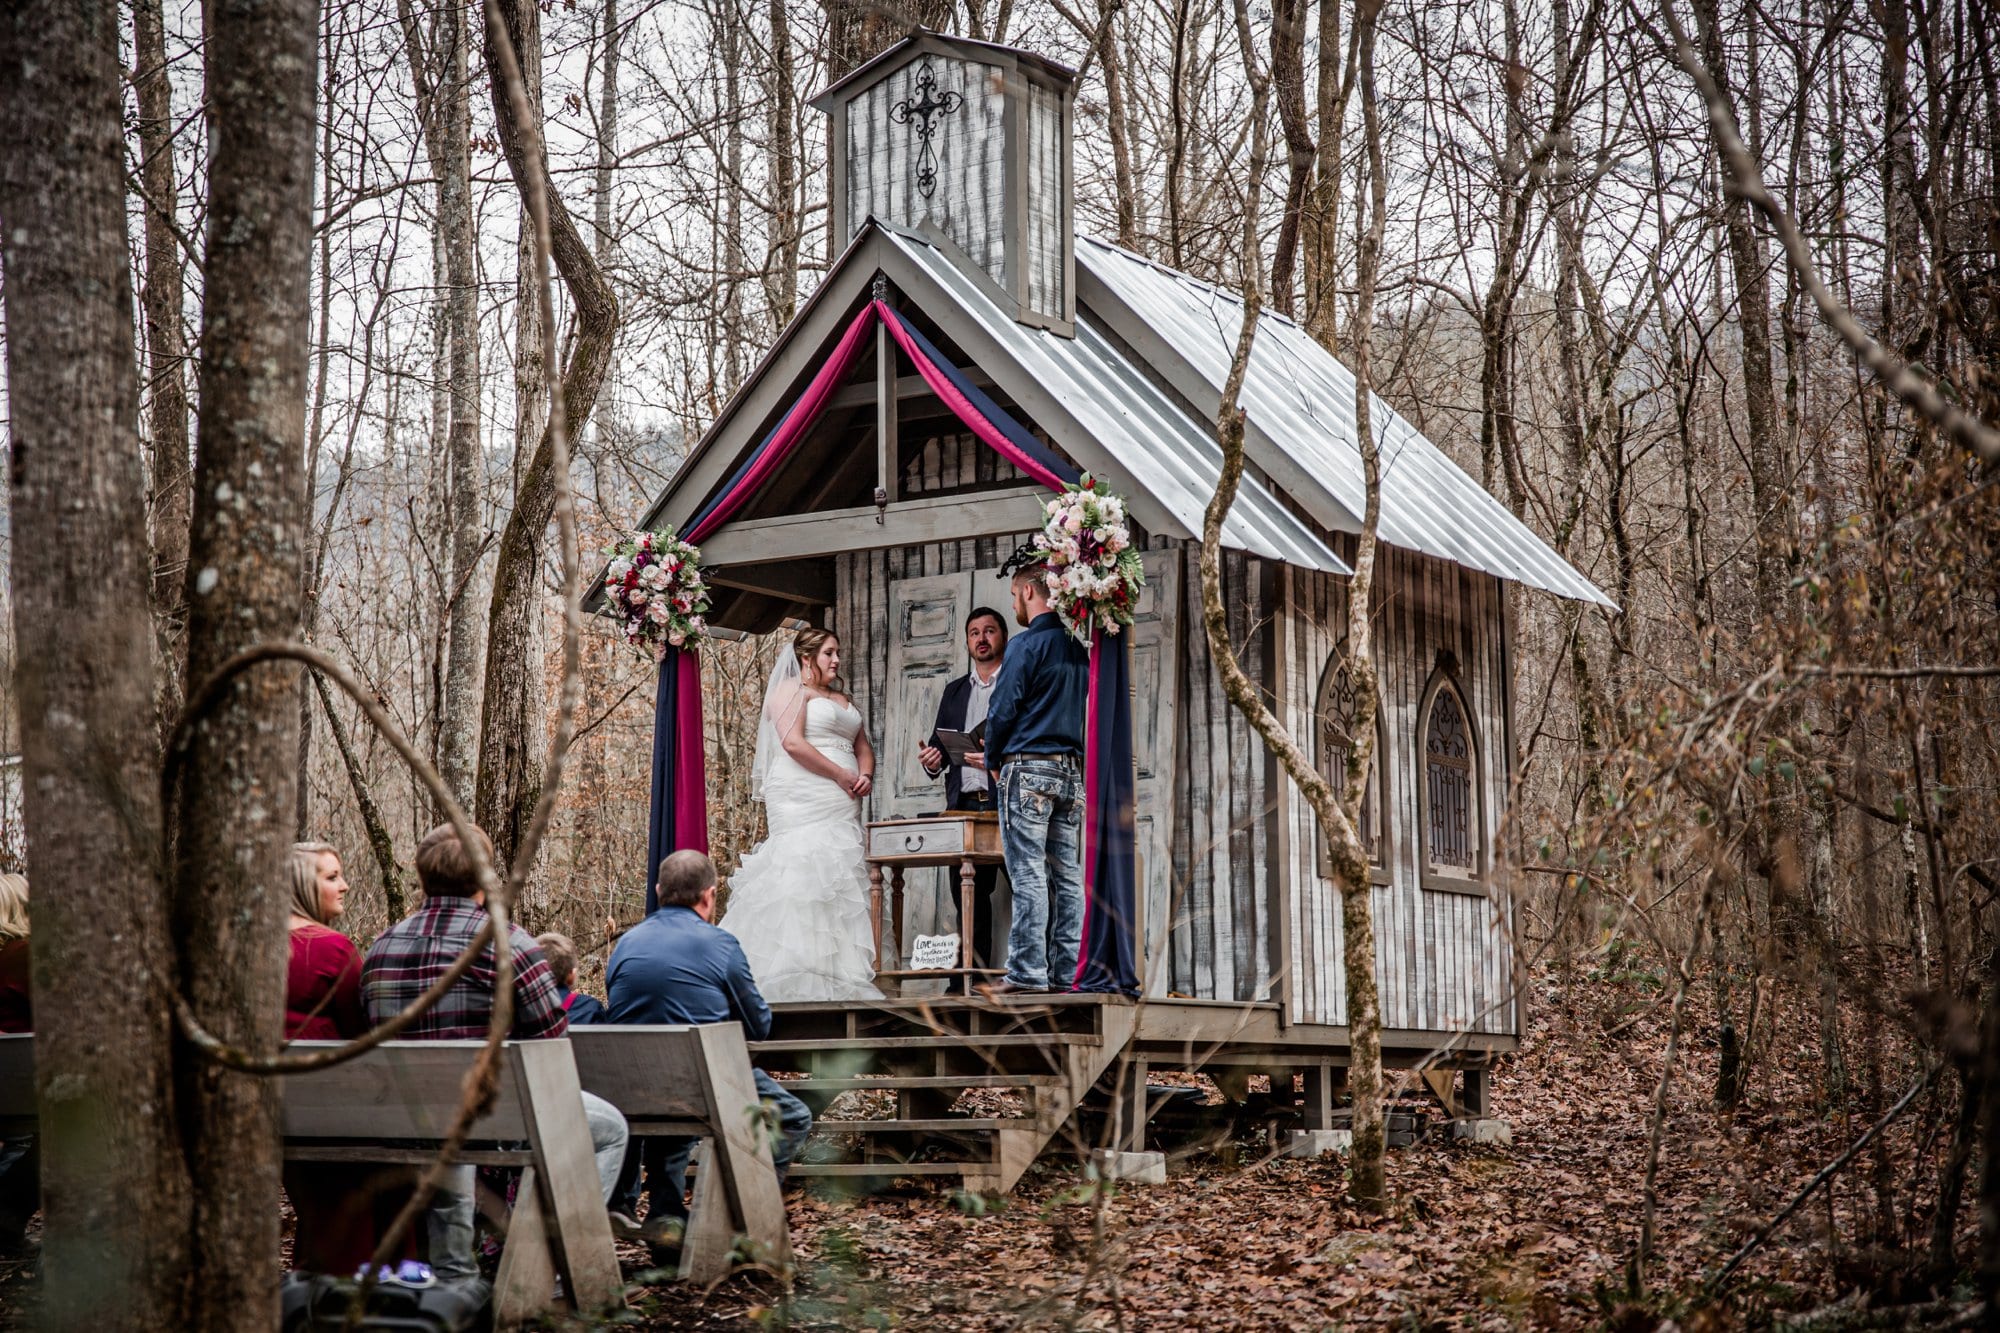 Smoky Mountain wedding chapel holding Micro Weddings in Tennessee. 